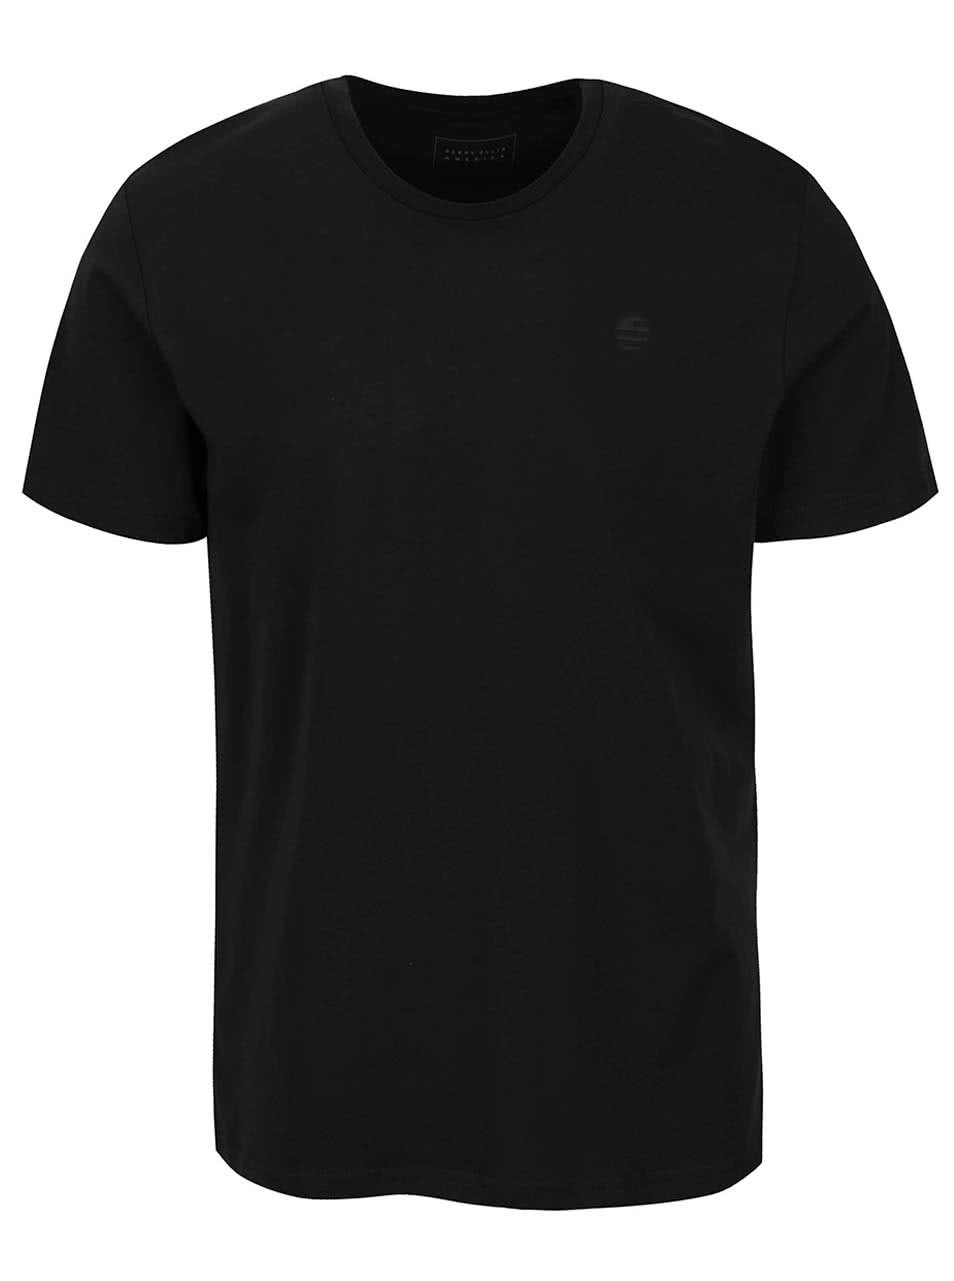 Černé pánské triko s potiskem Perry Ellis Tour